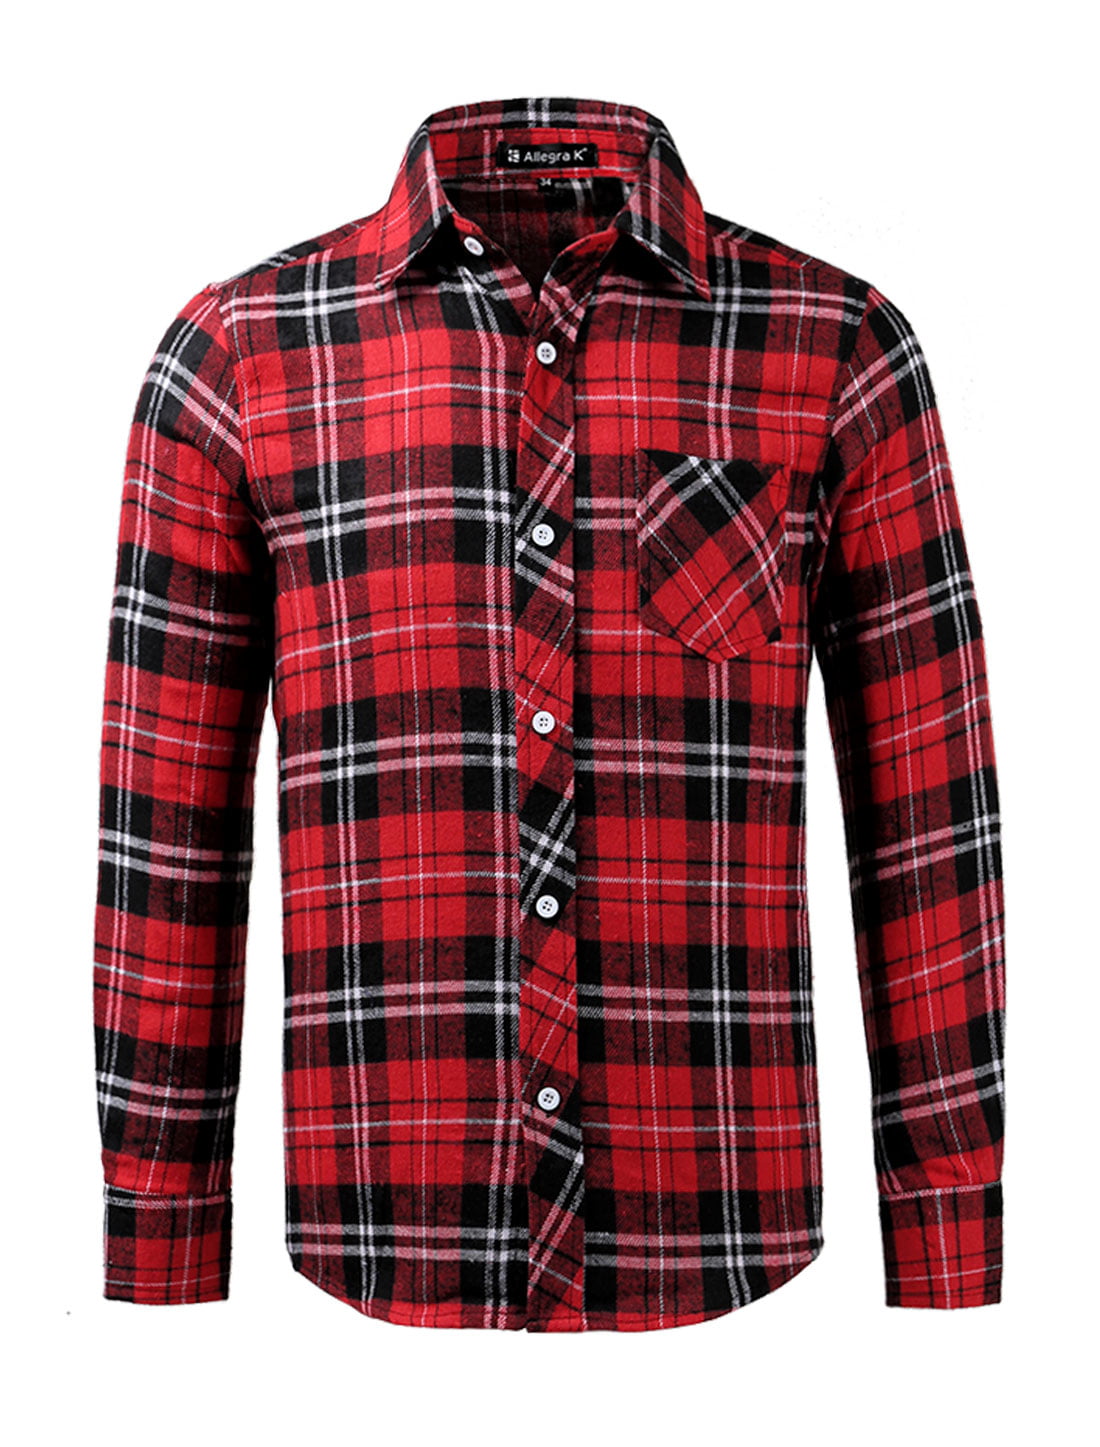 Unique Bargains Men Long Sleeves Check Print Button Down Plaid Flannel Shirt S Us 34 Red Black